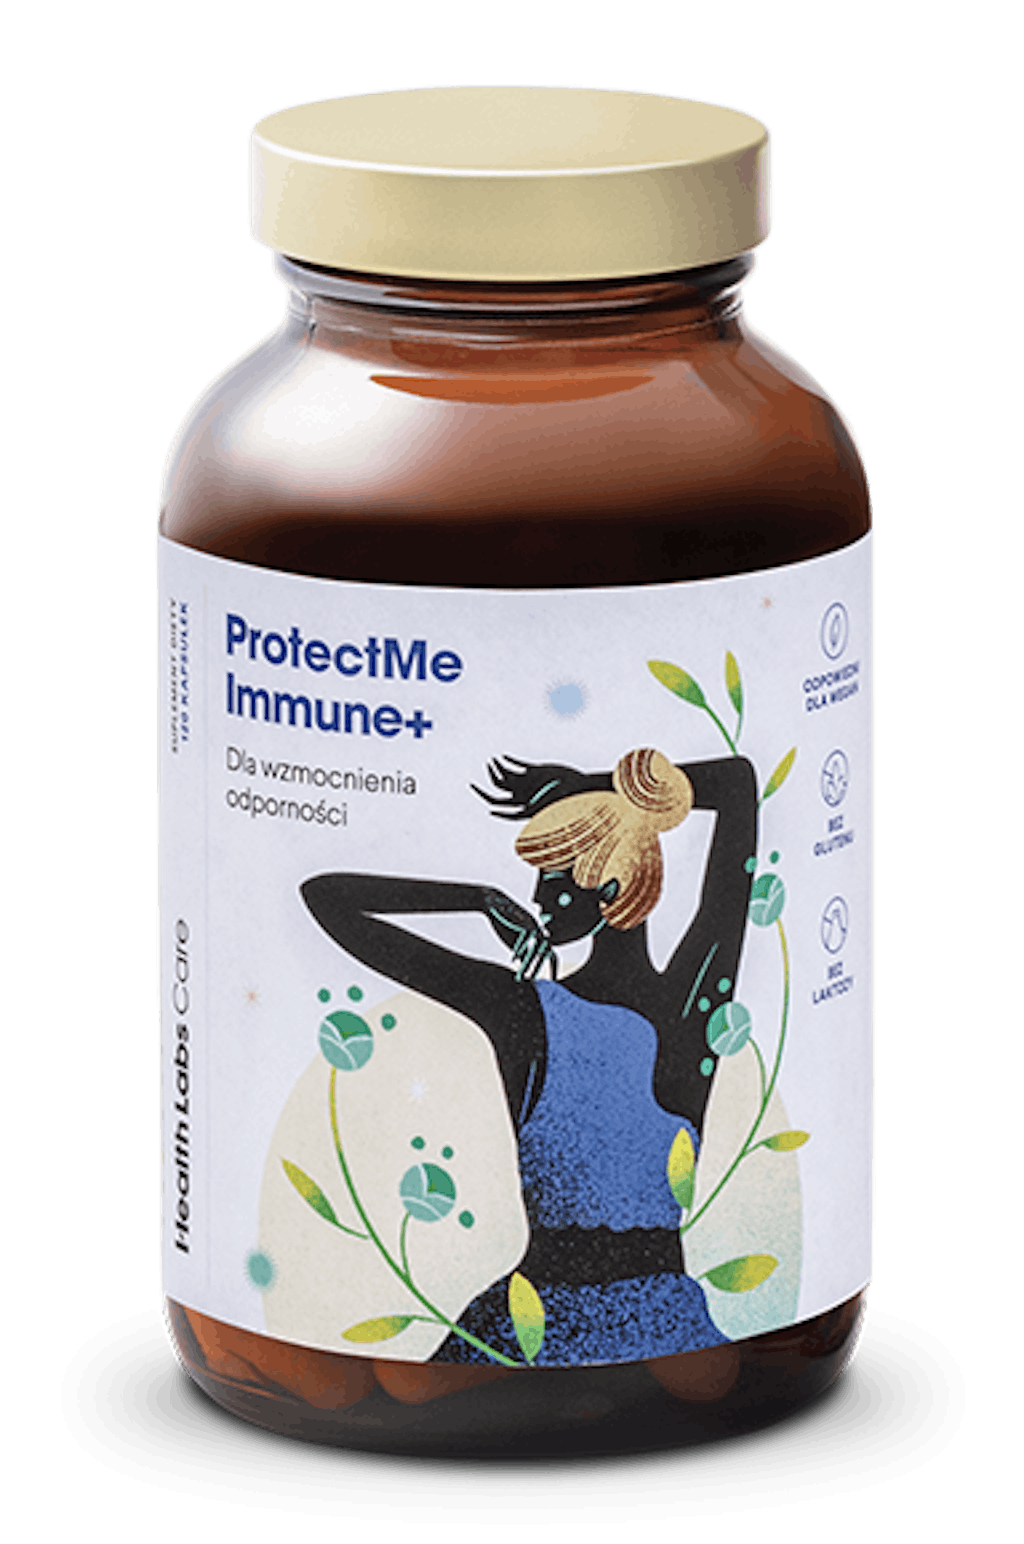 ProtectMe Immune+